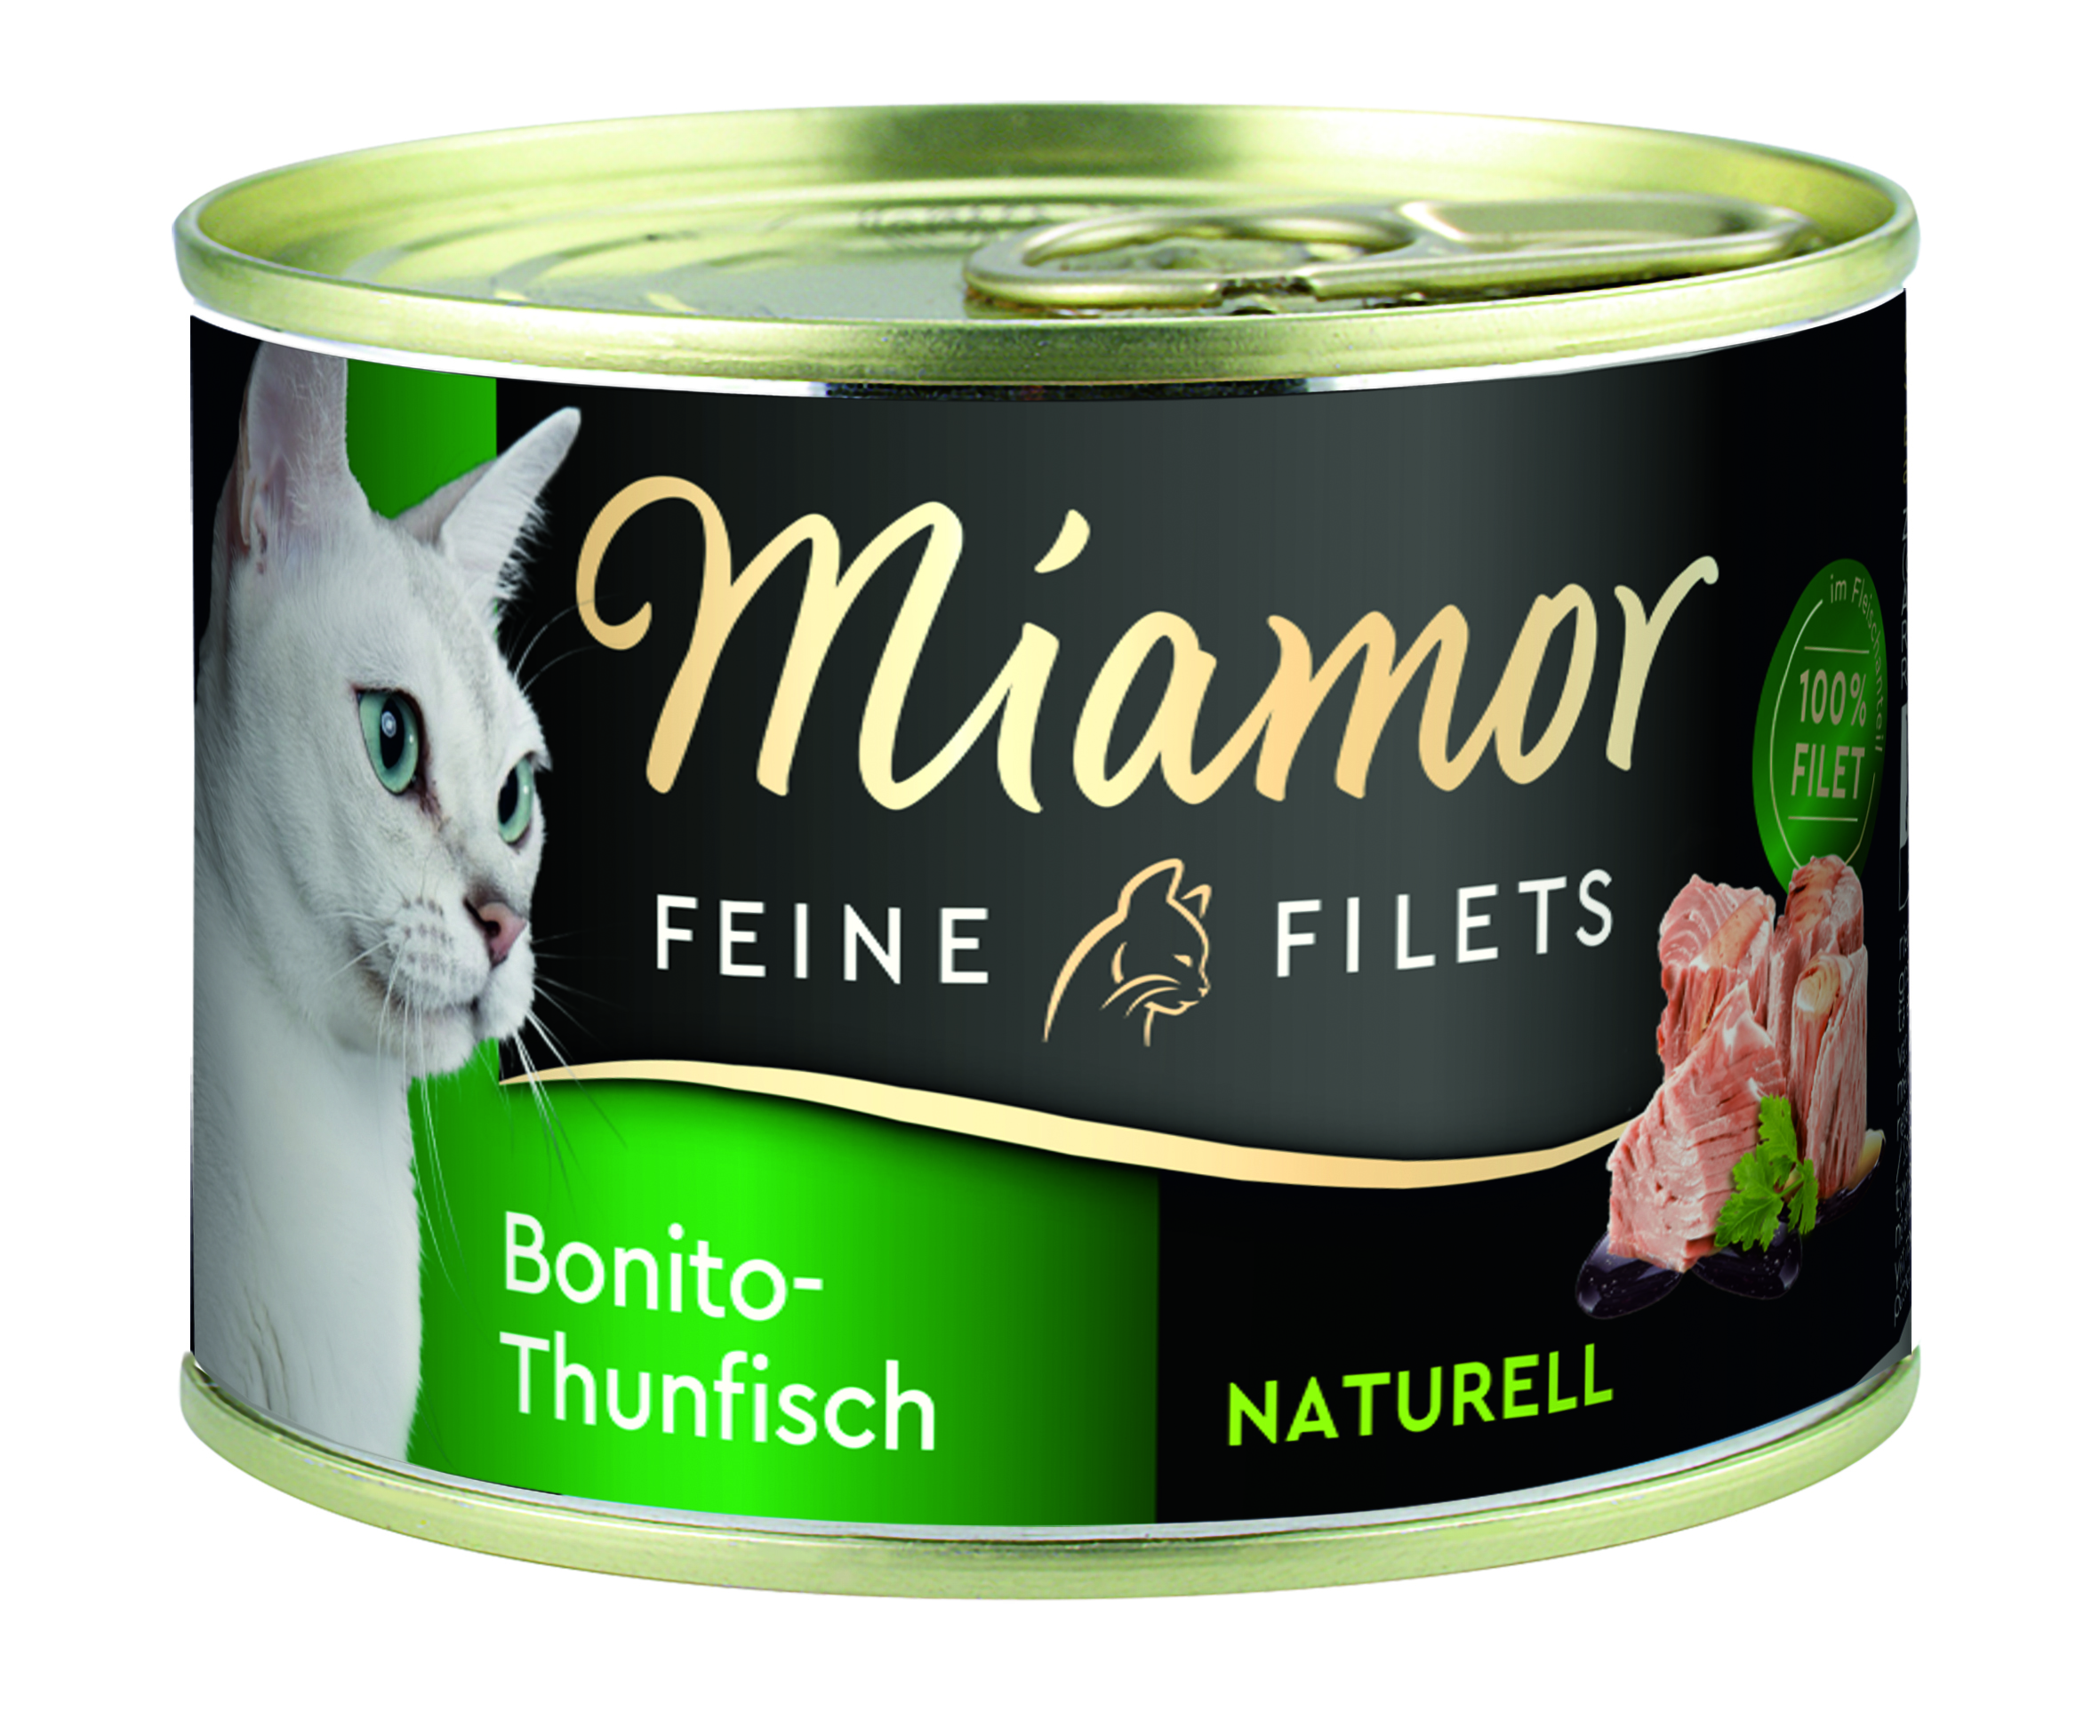 Miamor Feine Filets Naturell Bonito-Thunfisch 156g Dose